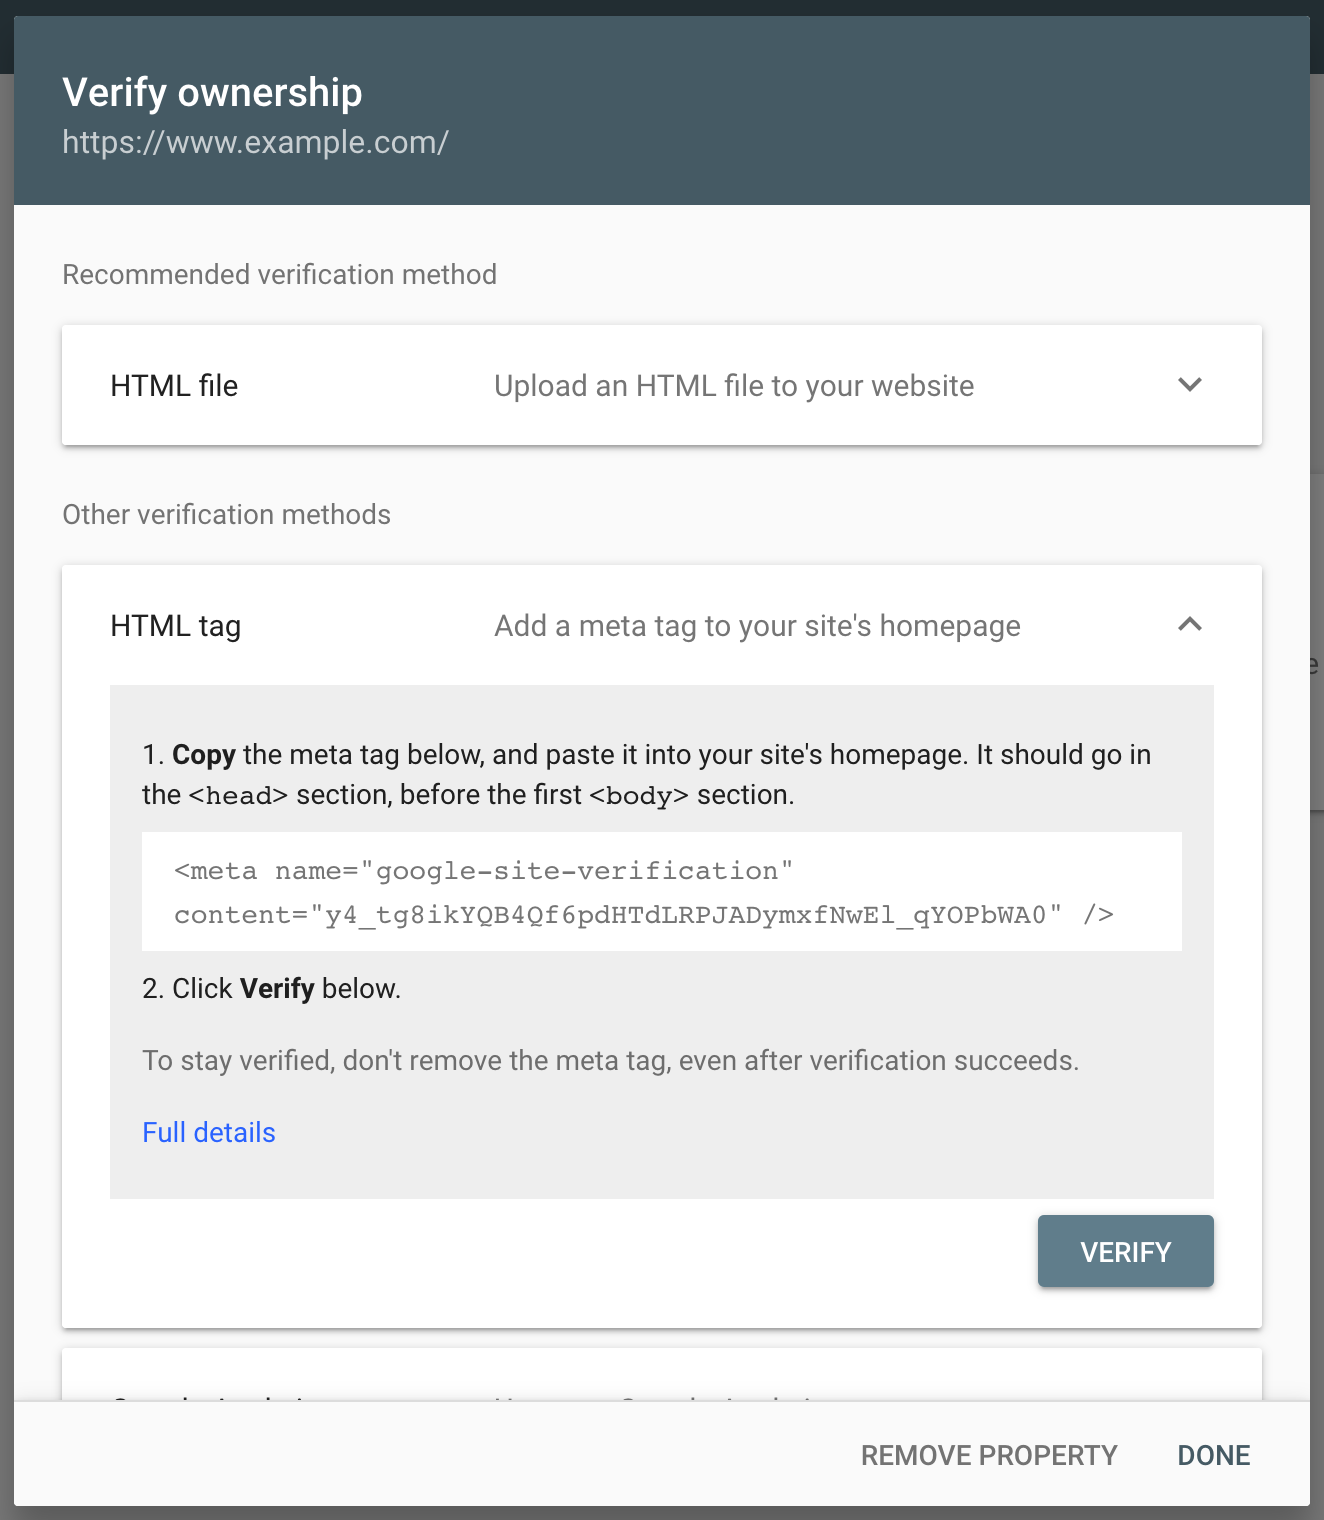 Screenshot of verification method window